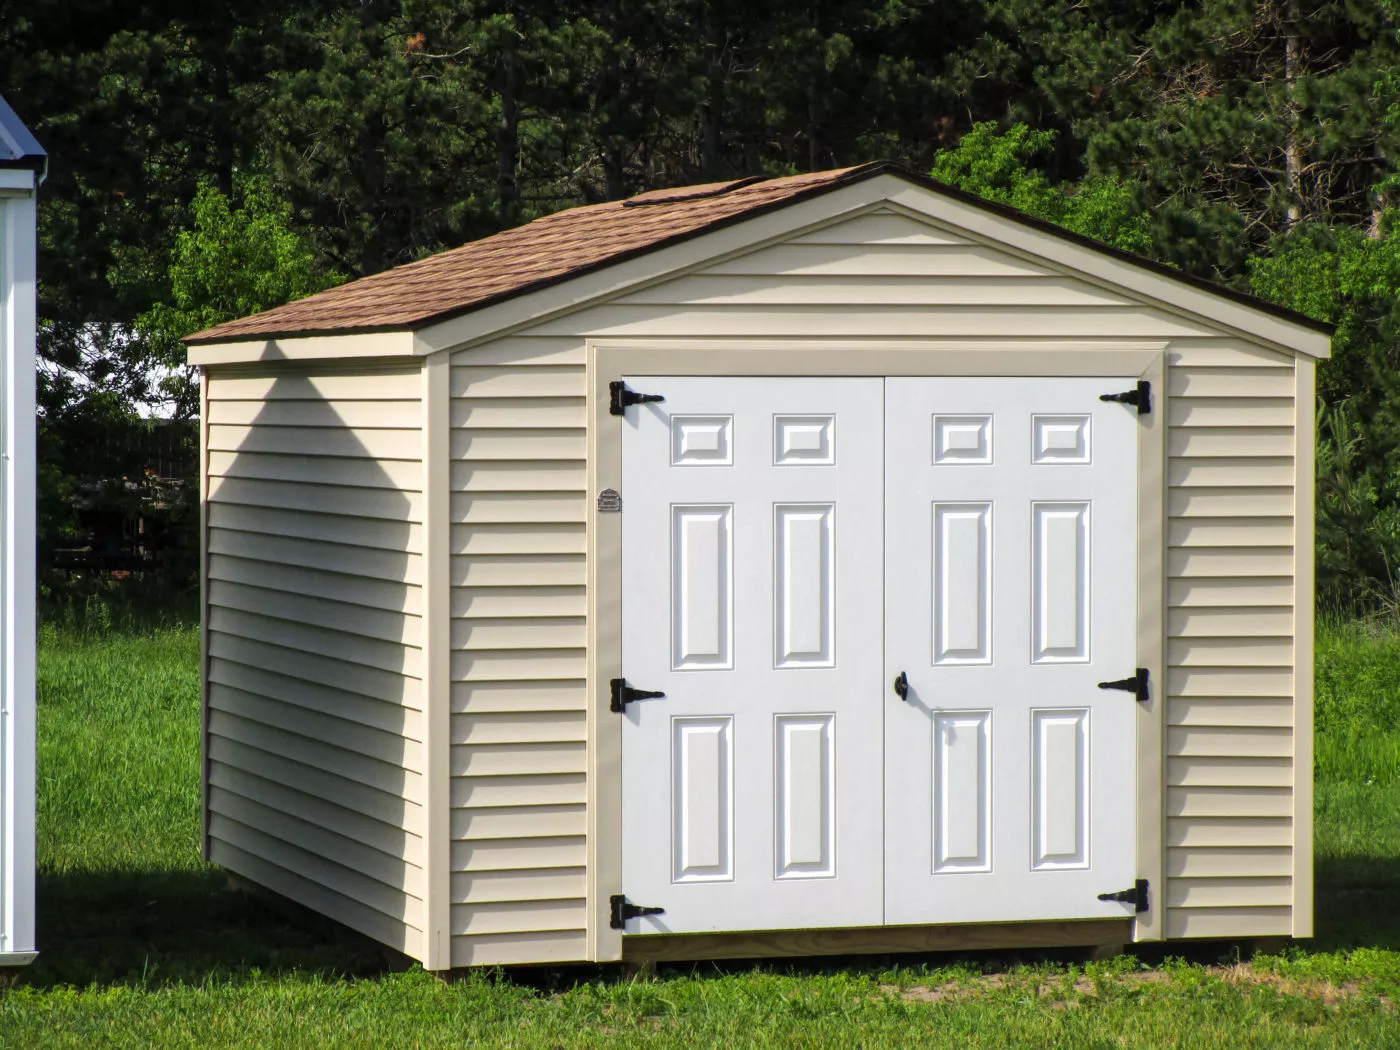 Mini Shelters For Sale In Evart, Michigan